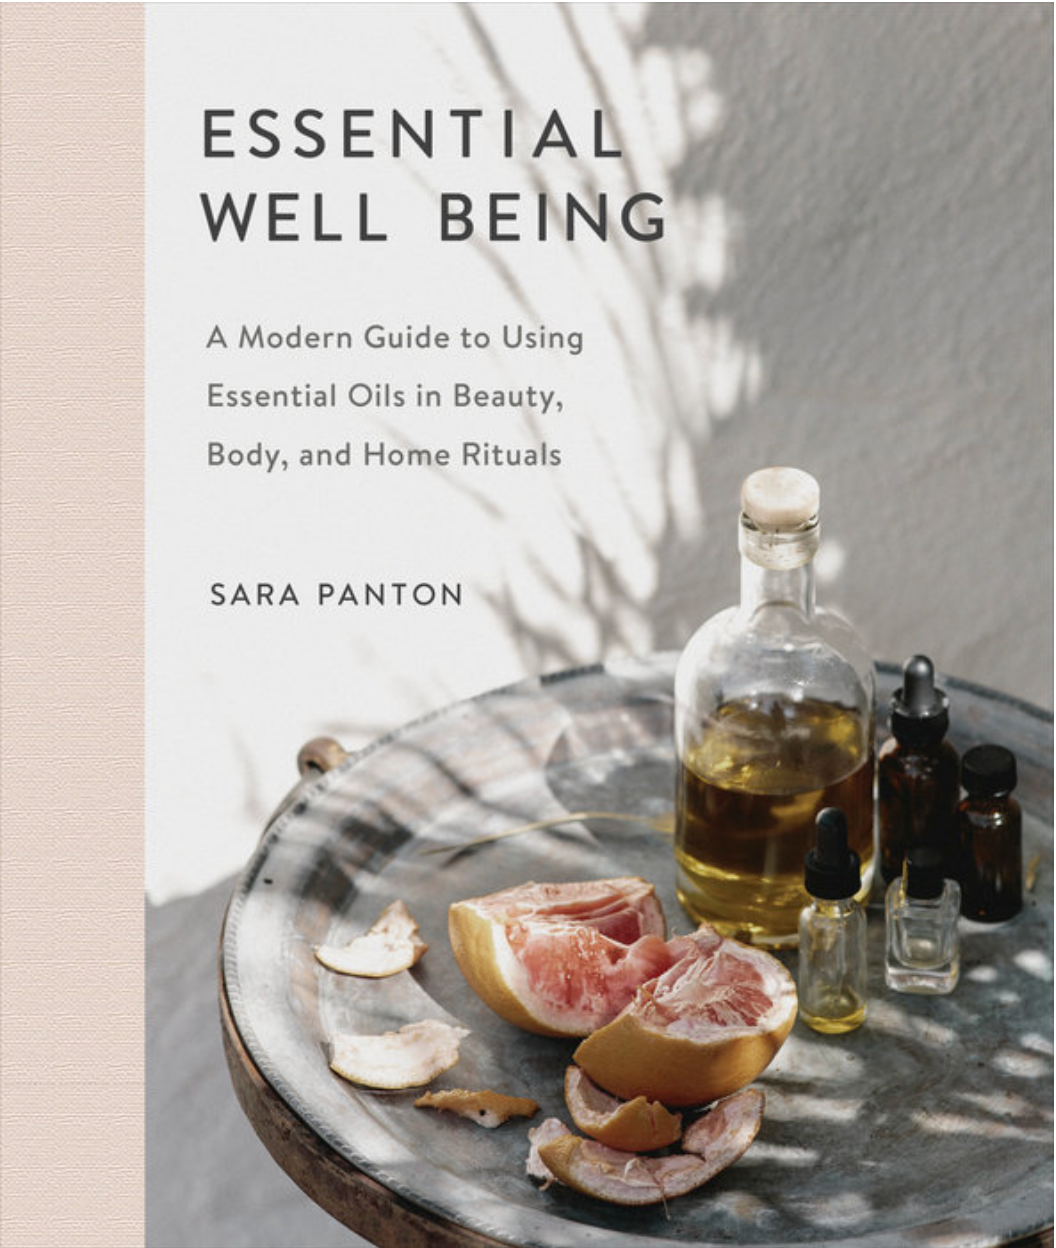 Essential Well Being by Sara Panton